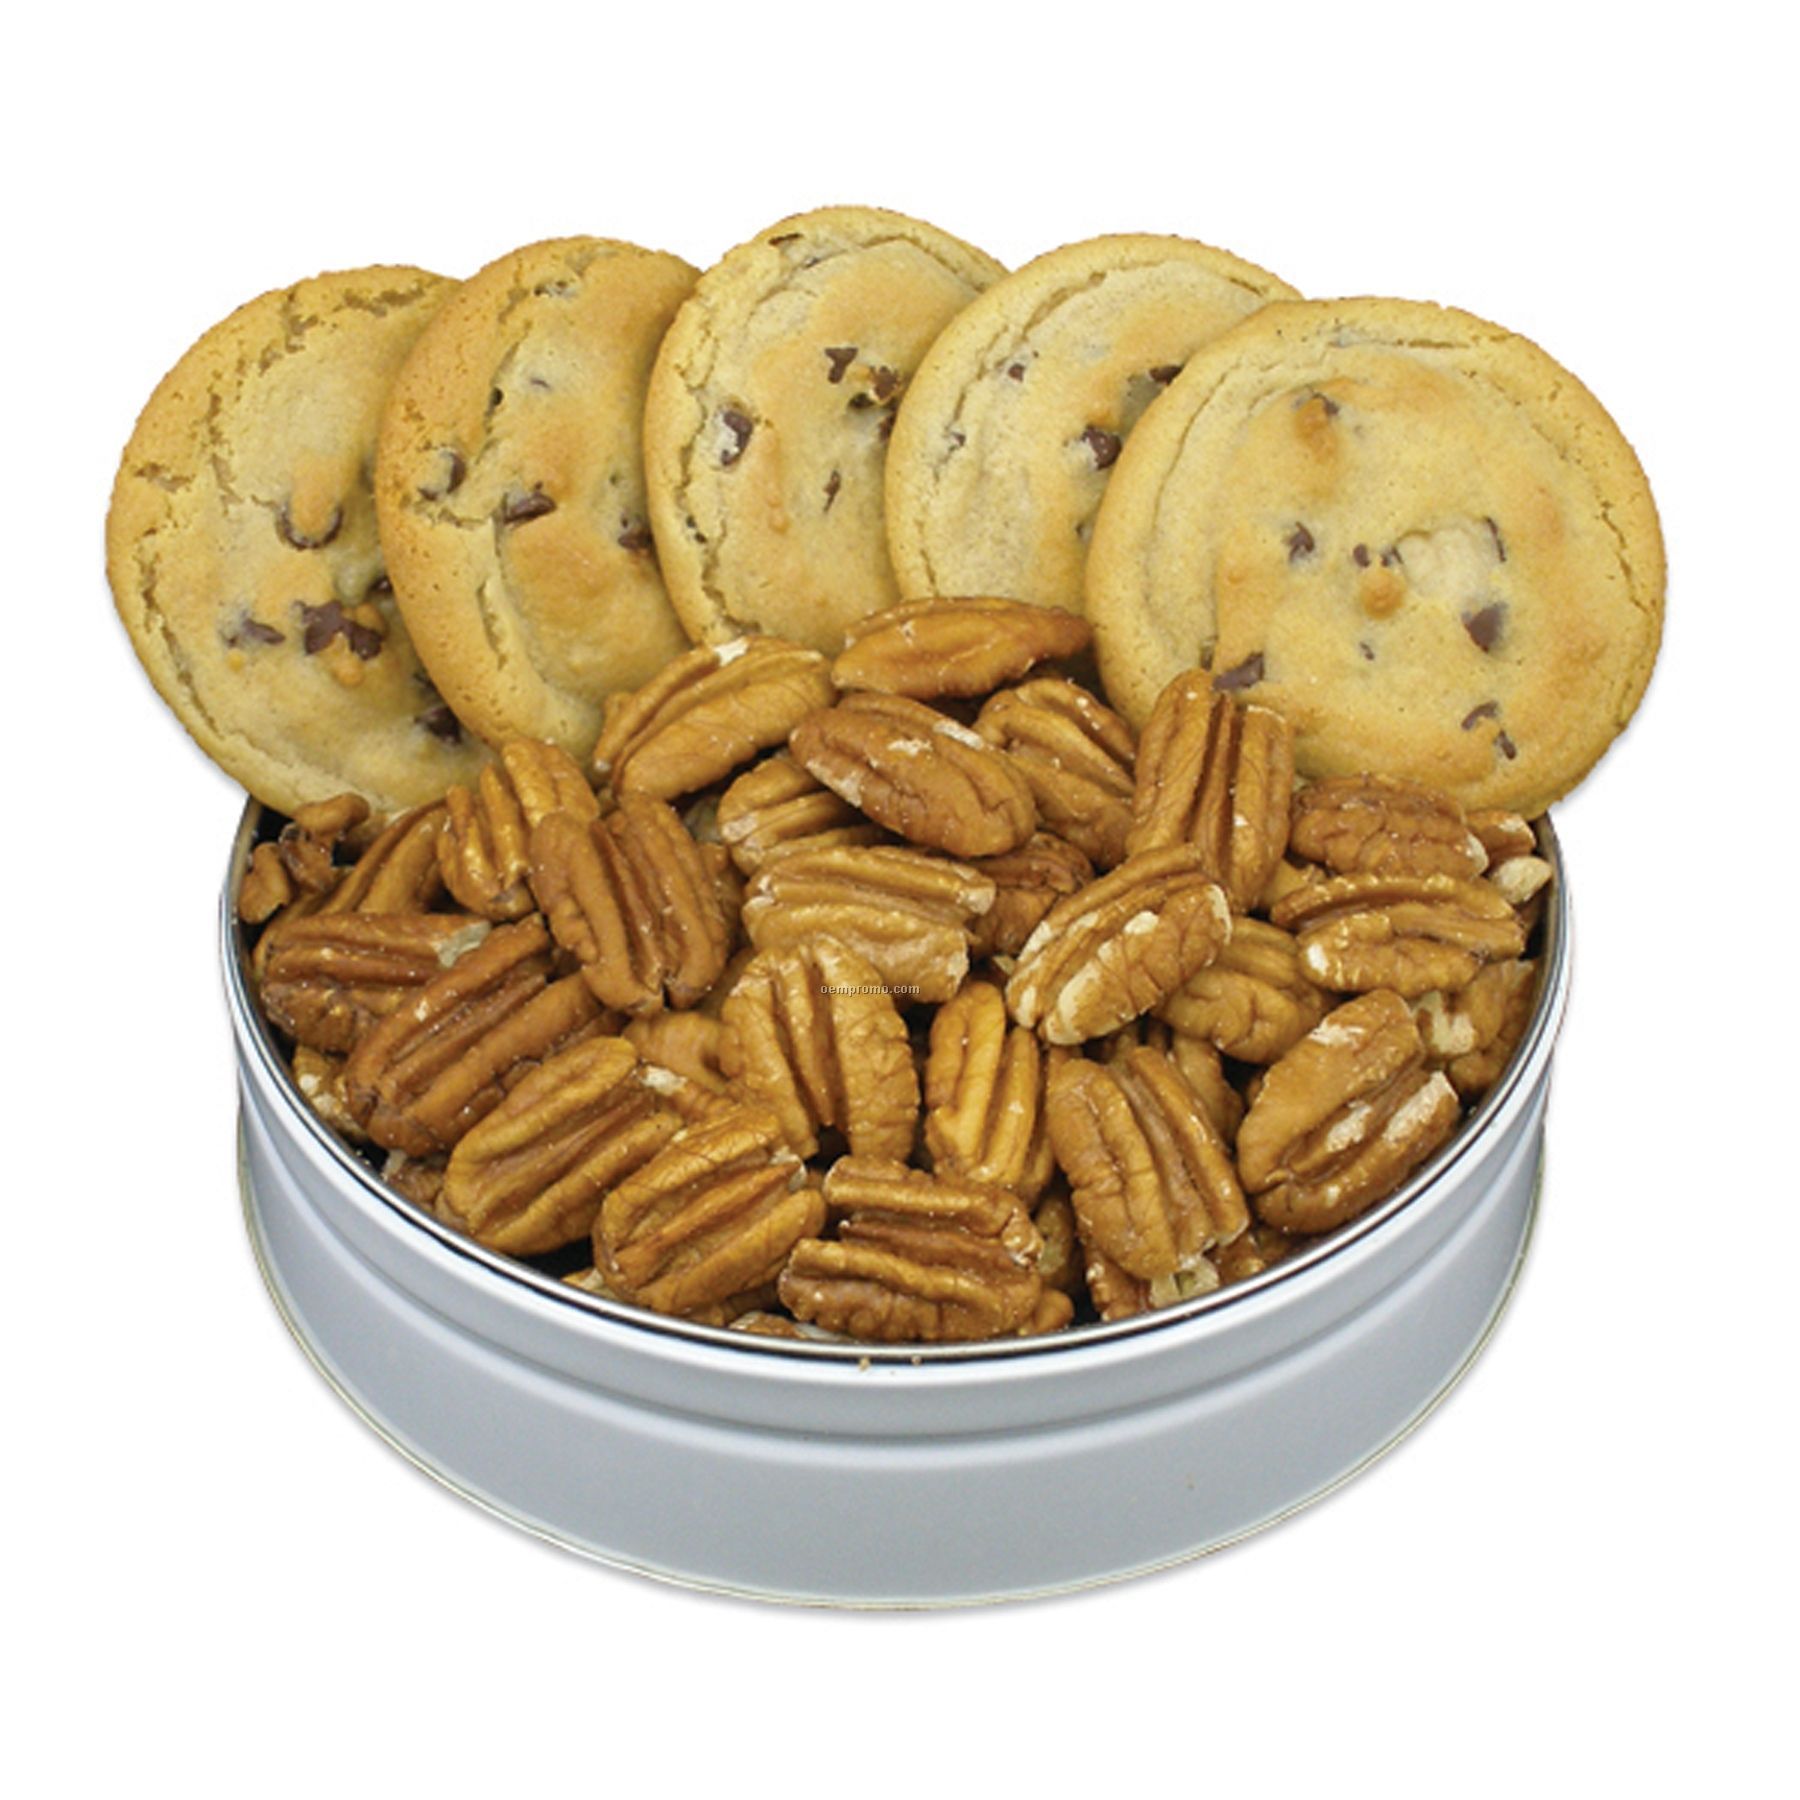 Cookie Nut Combos - Chocolate Chip (5 Cookies) Pecan Halves (4 Oz.)